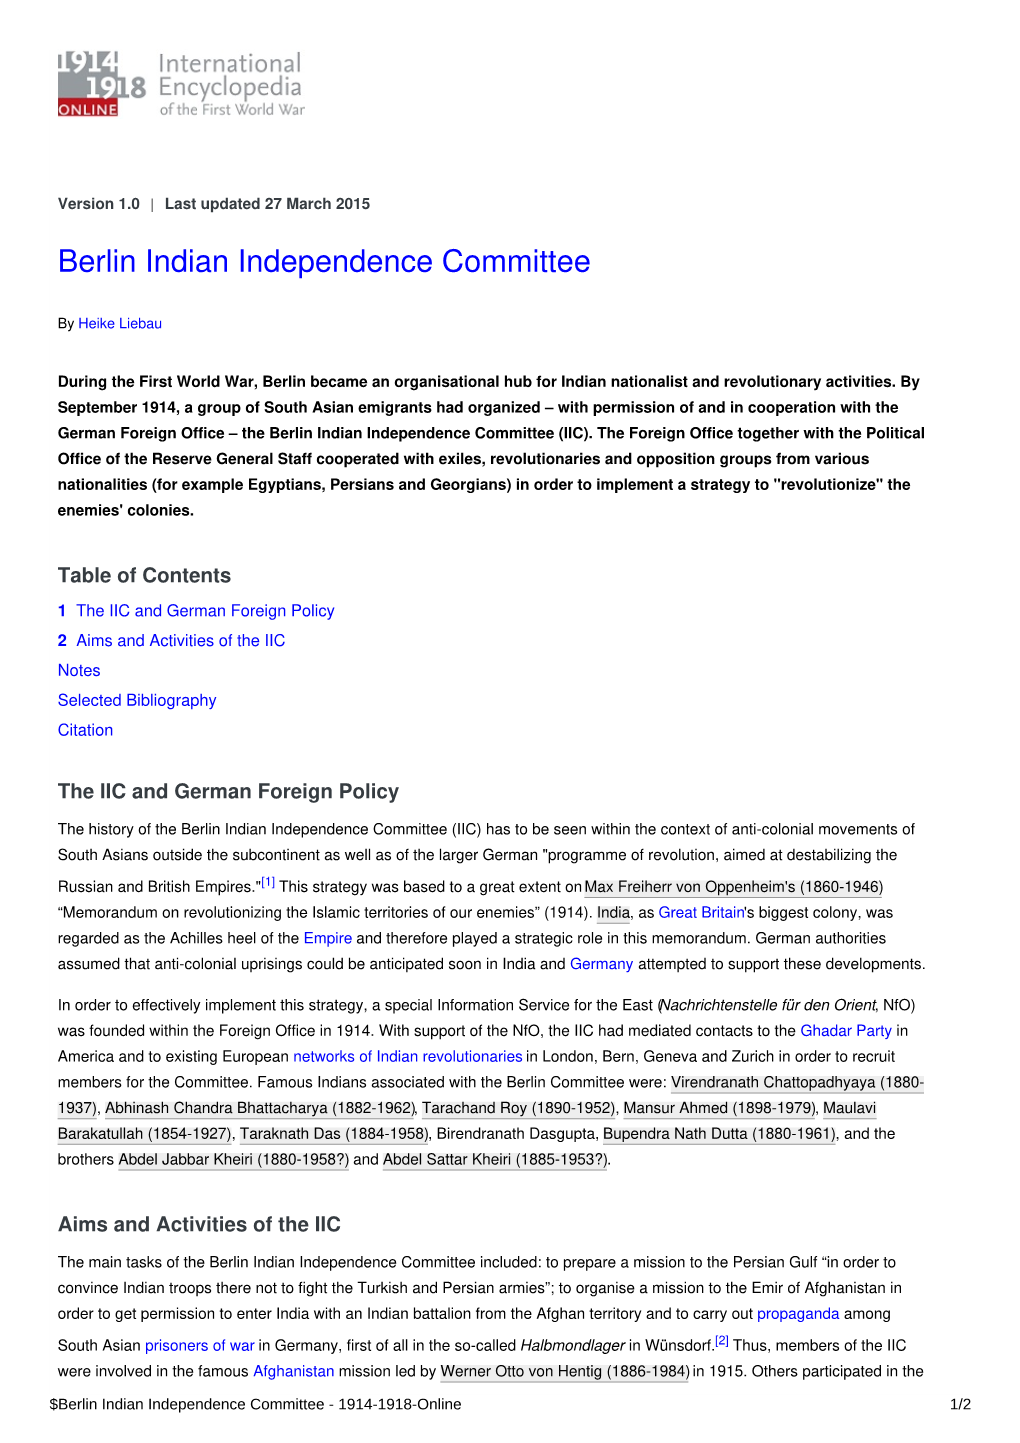 Berlin Indian Independence Committee | International